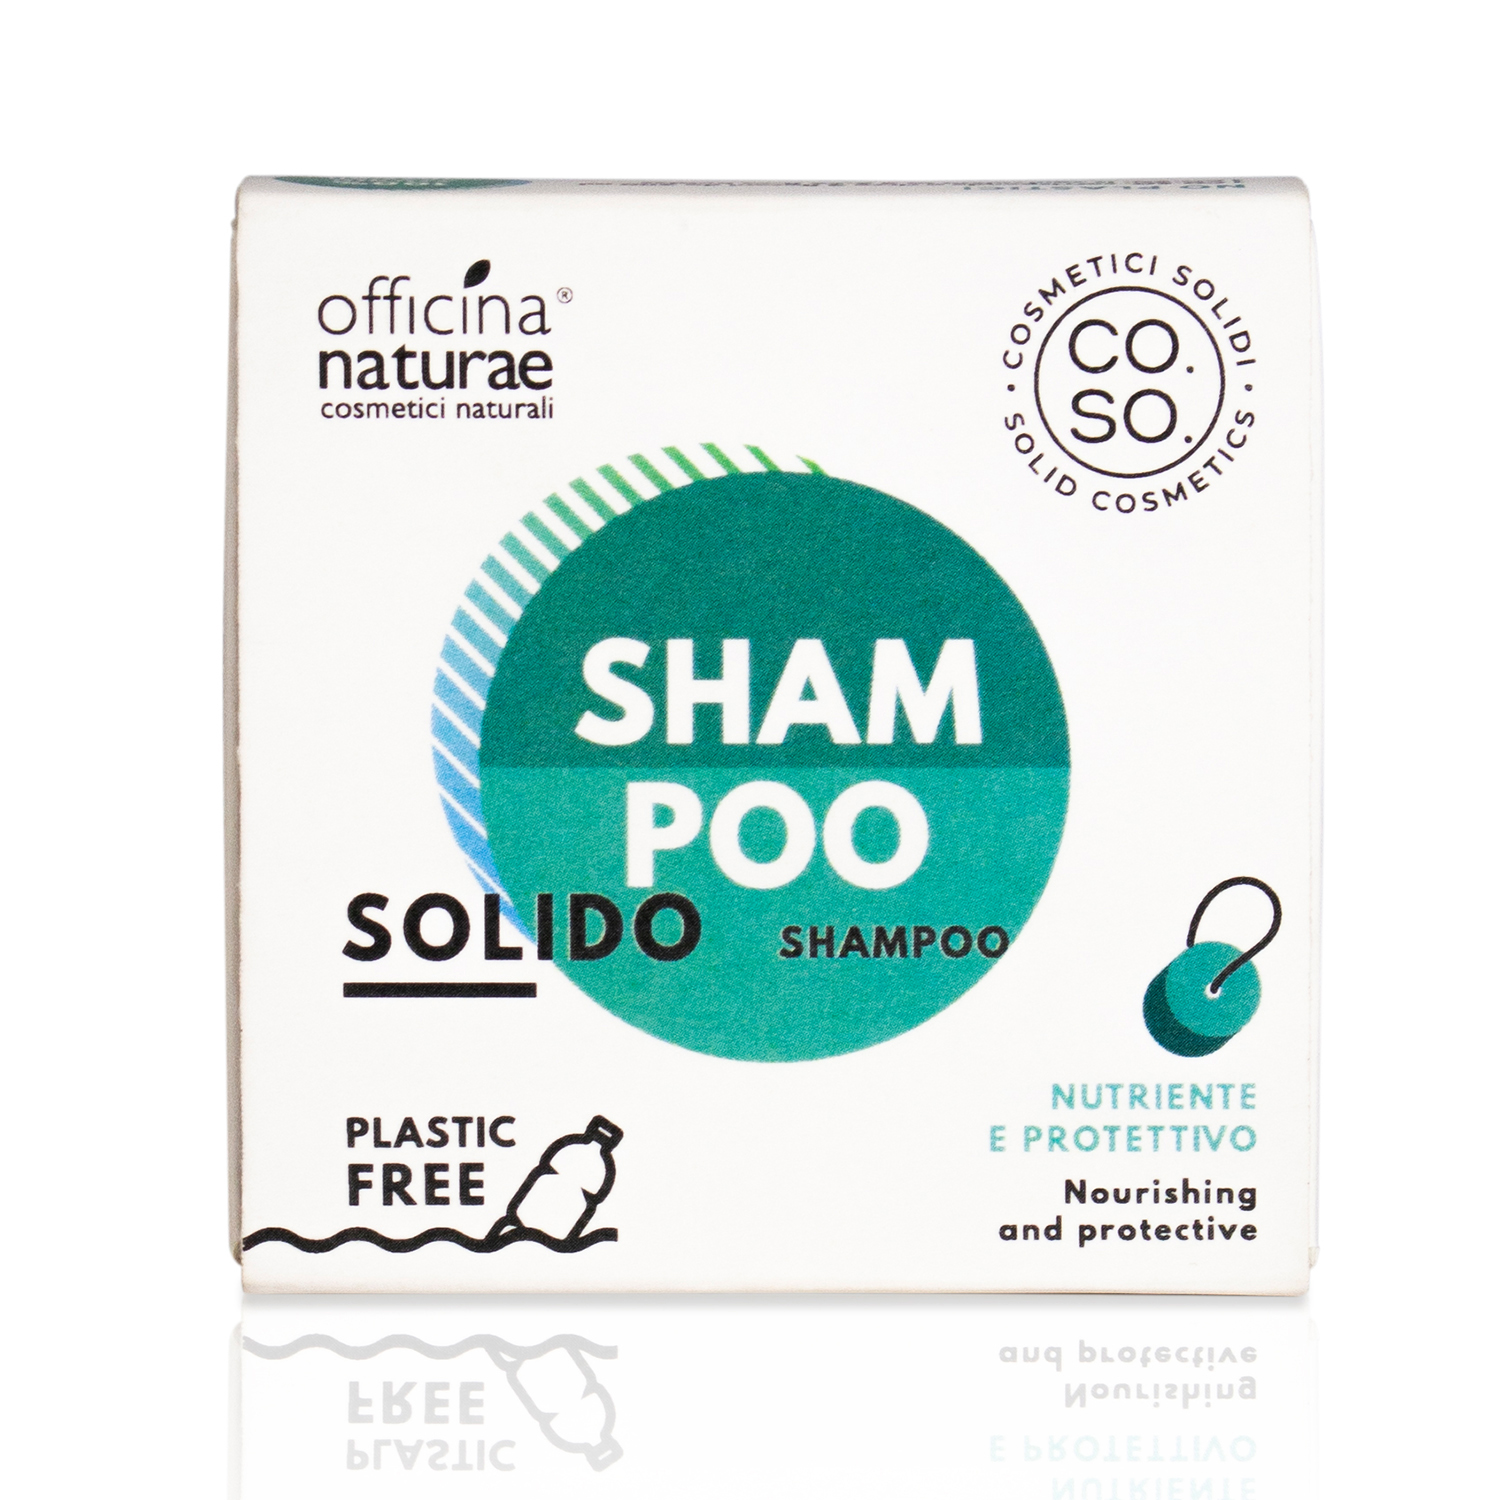 Officina Nourishing & Protective Solid Shampoo 64G in Dubai, UAE